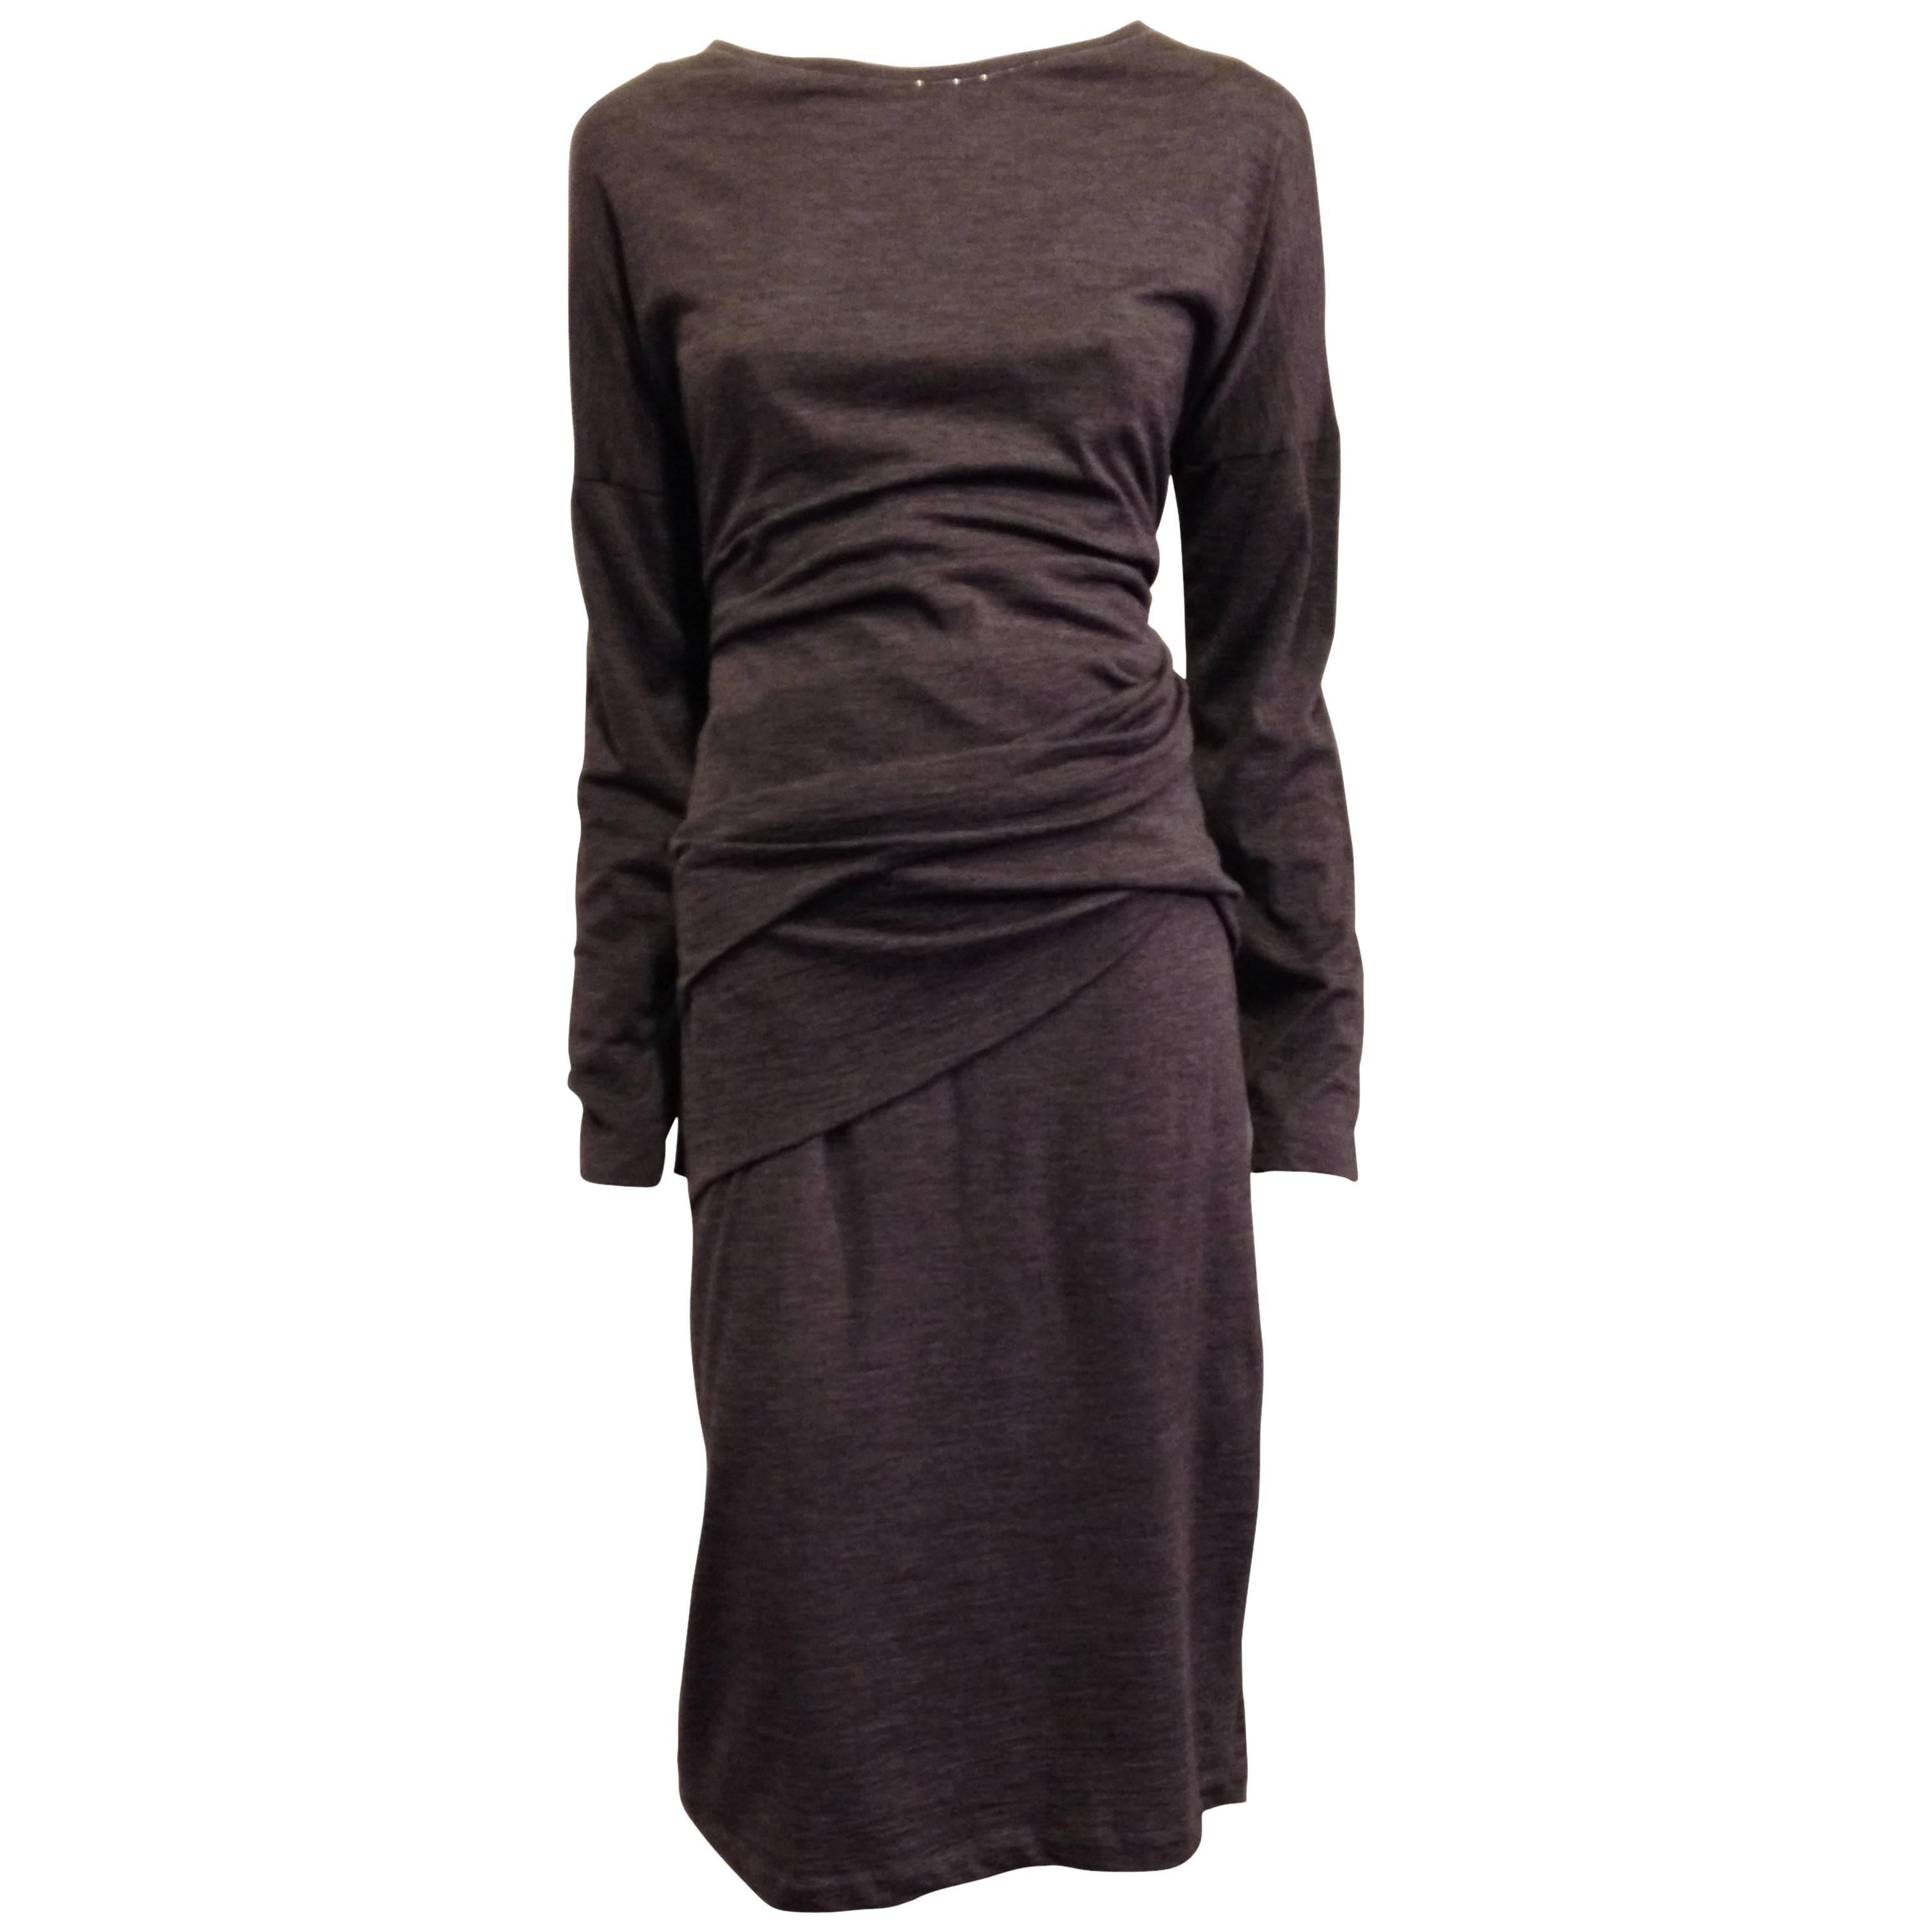 Brunello Cucinelli Charcoal Grey Knit Dress